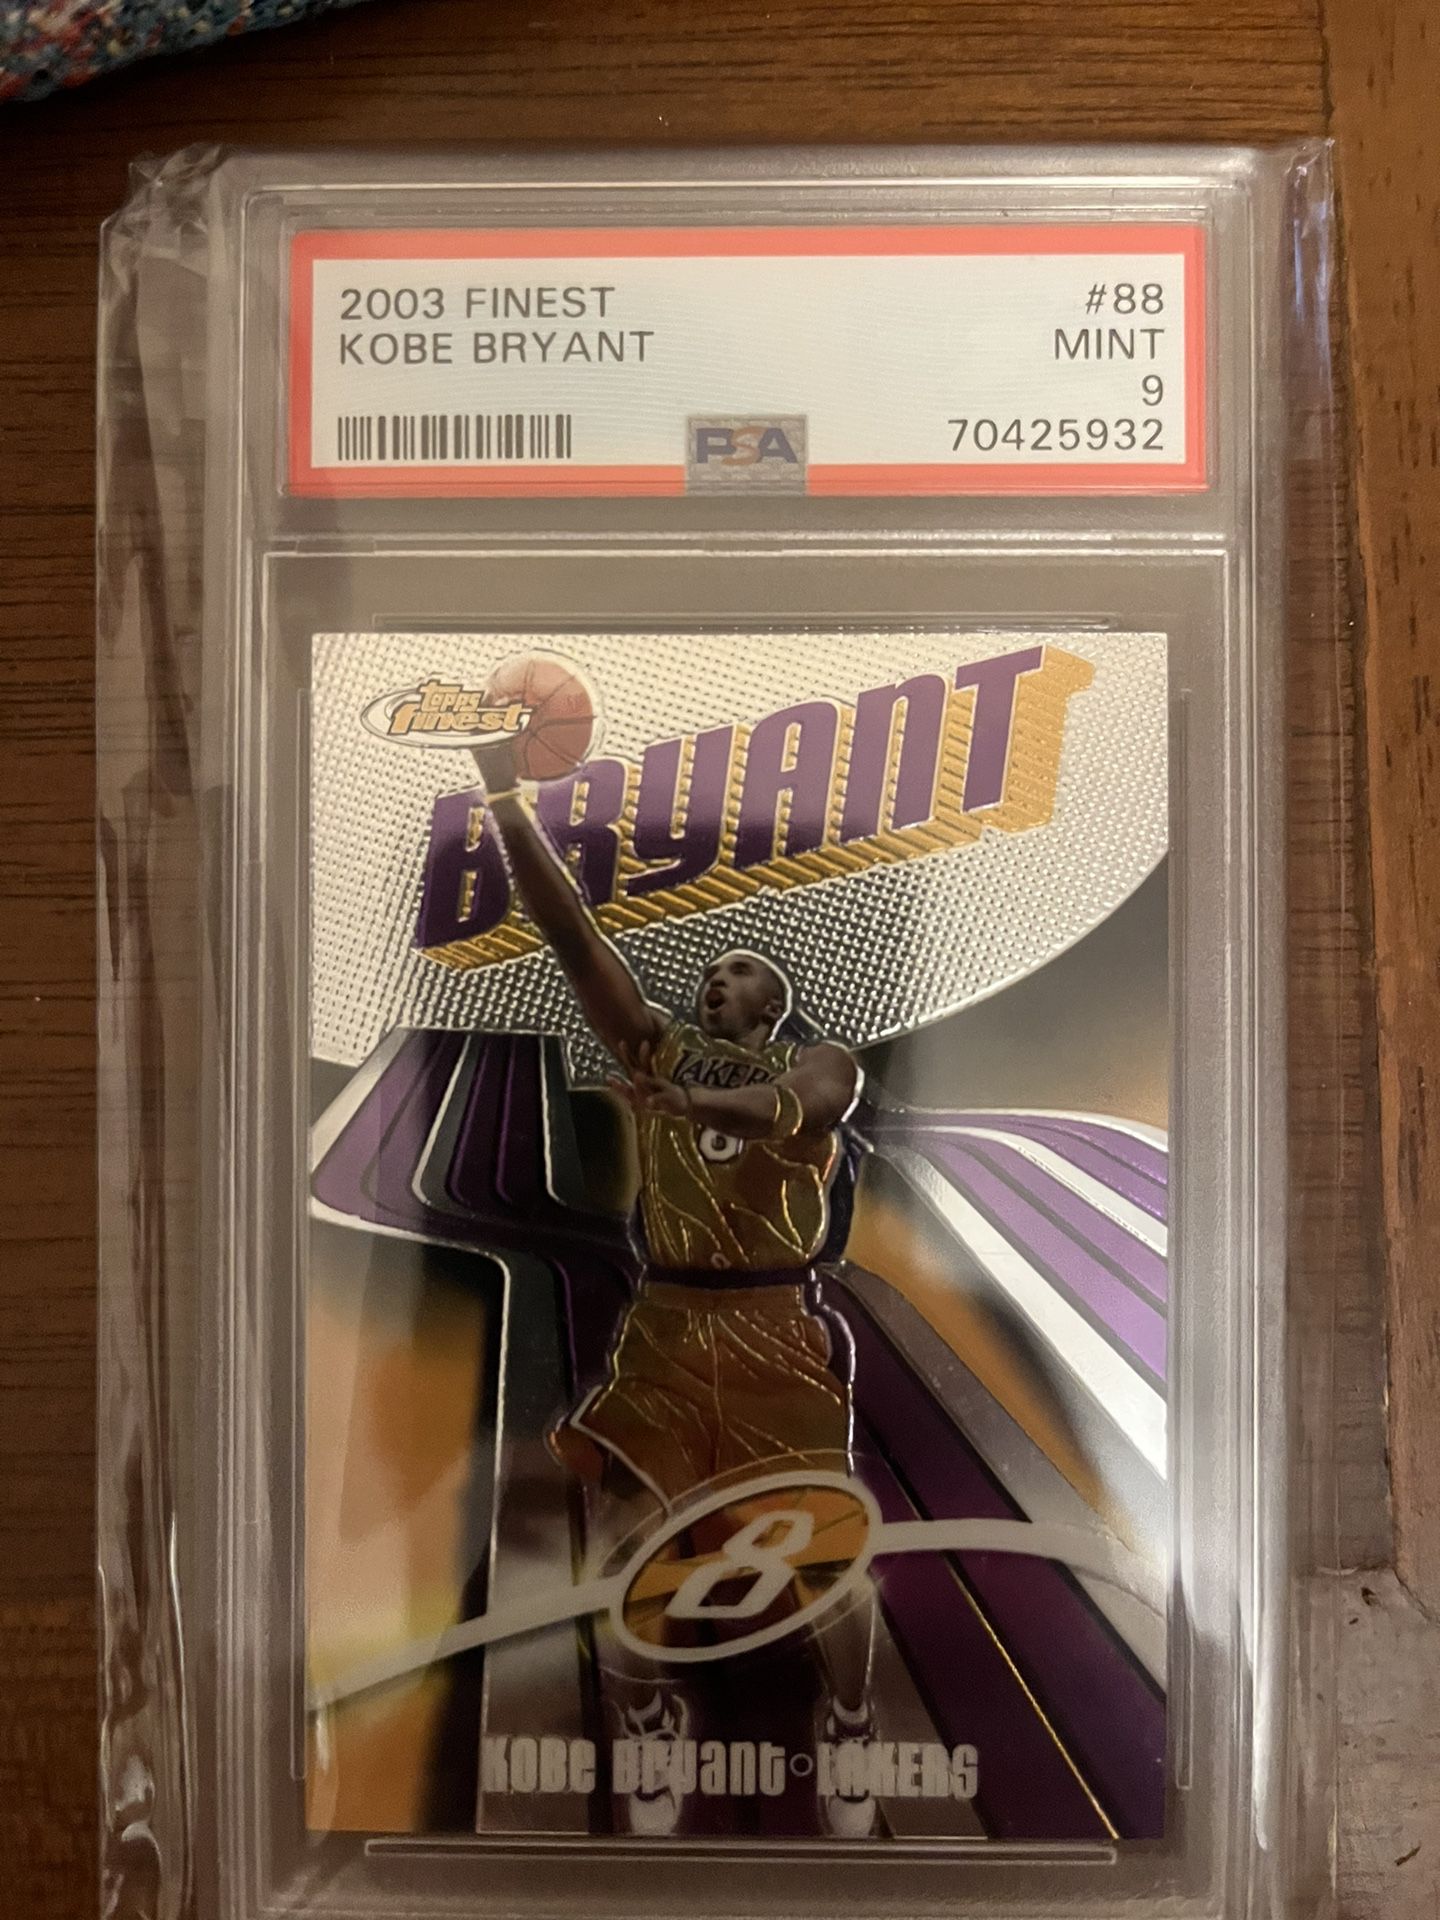 2003 Kobe Bryant Card Graded PSA 9